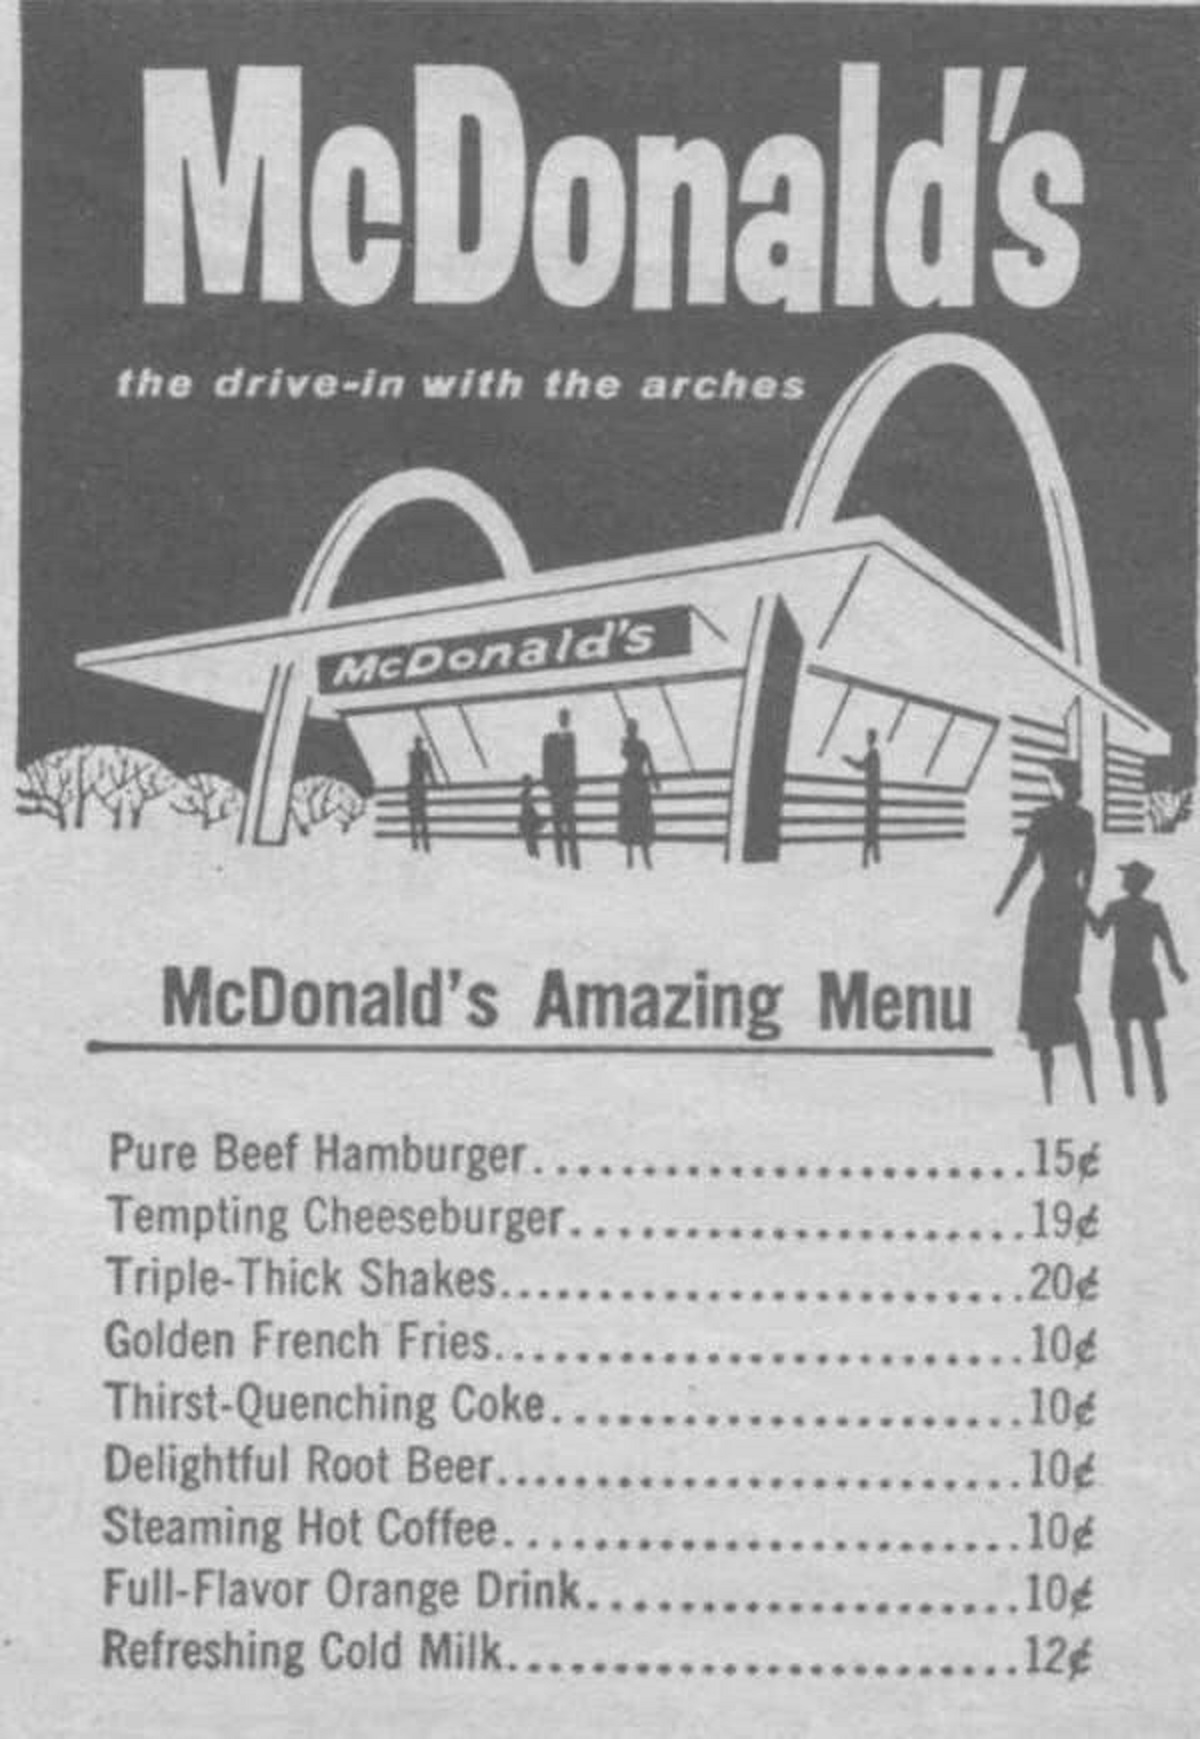 Here's what the original McDonald's menu was.